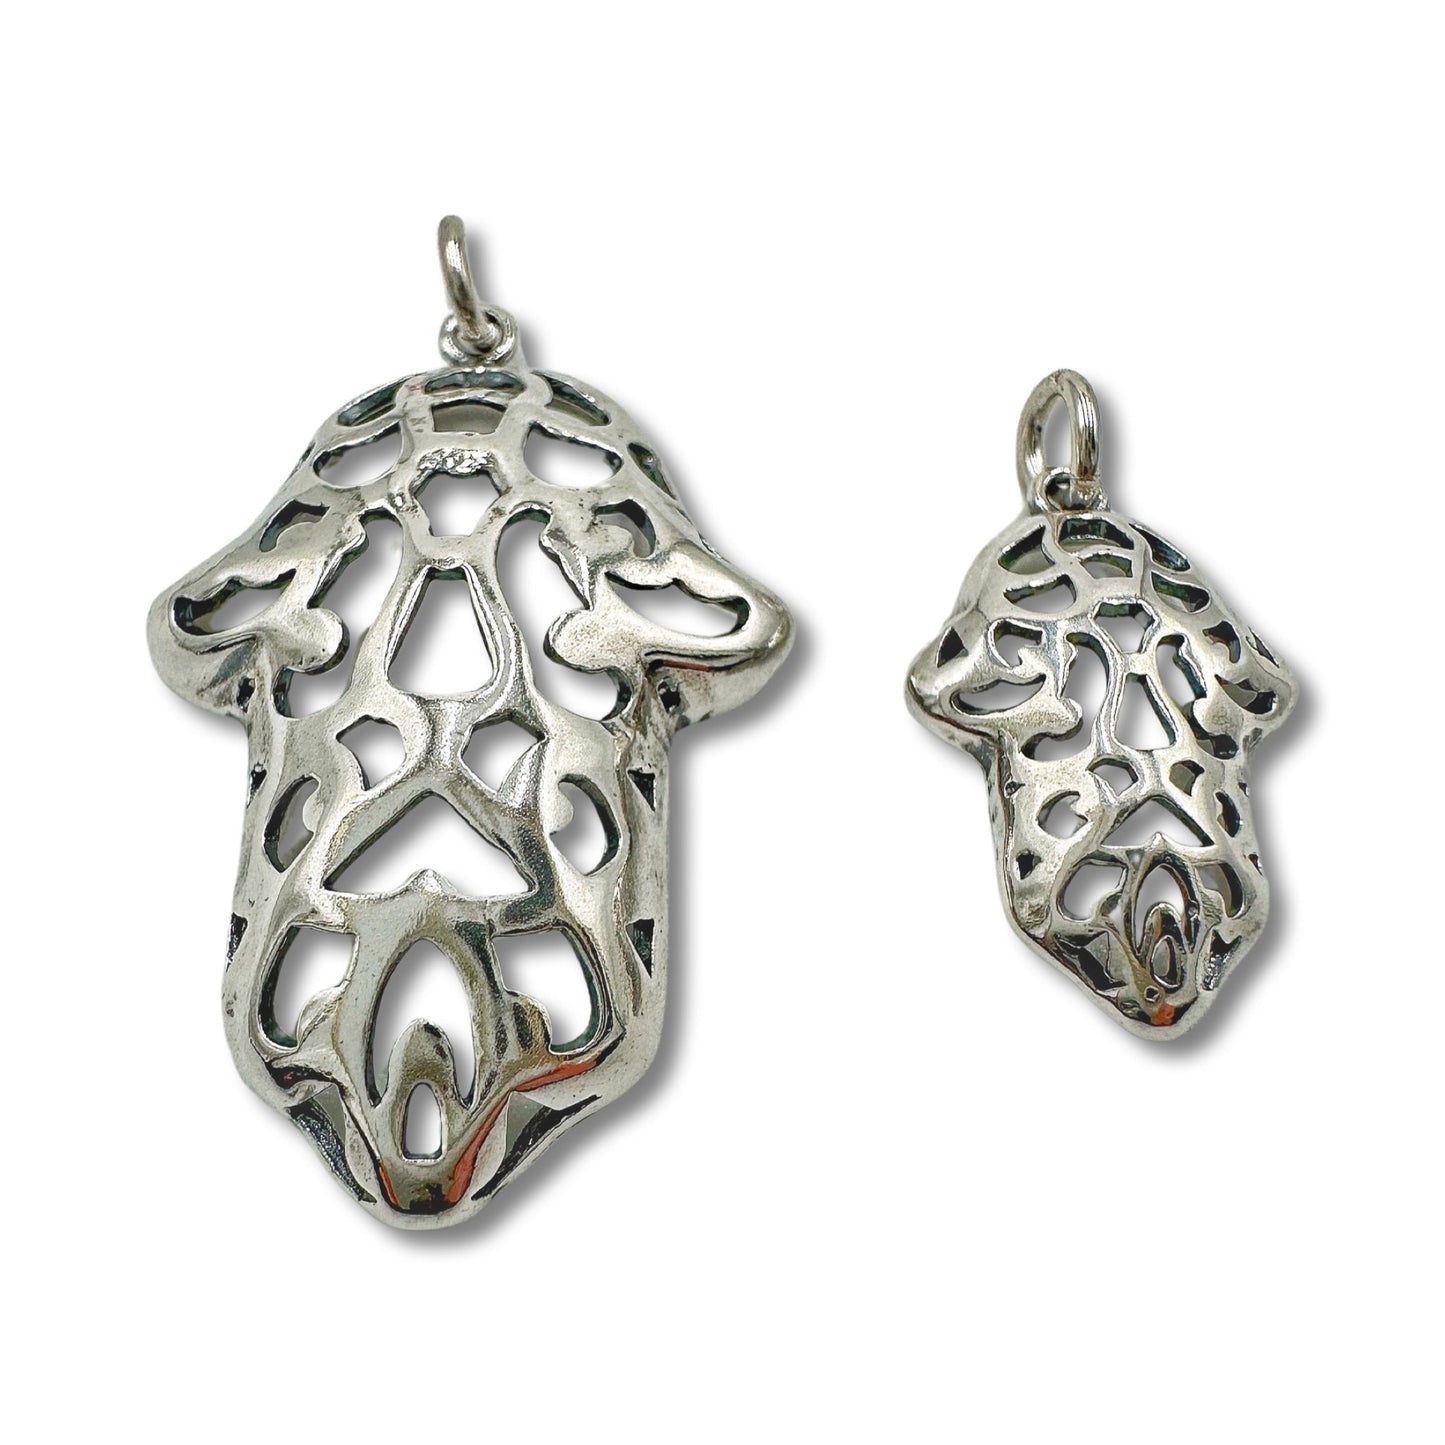 Big Sterling Silver Hamsa Necklace/Pendant